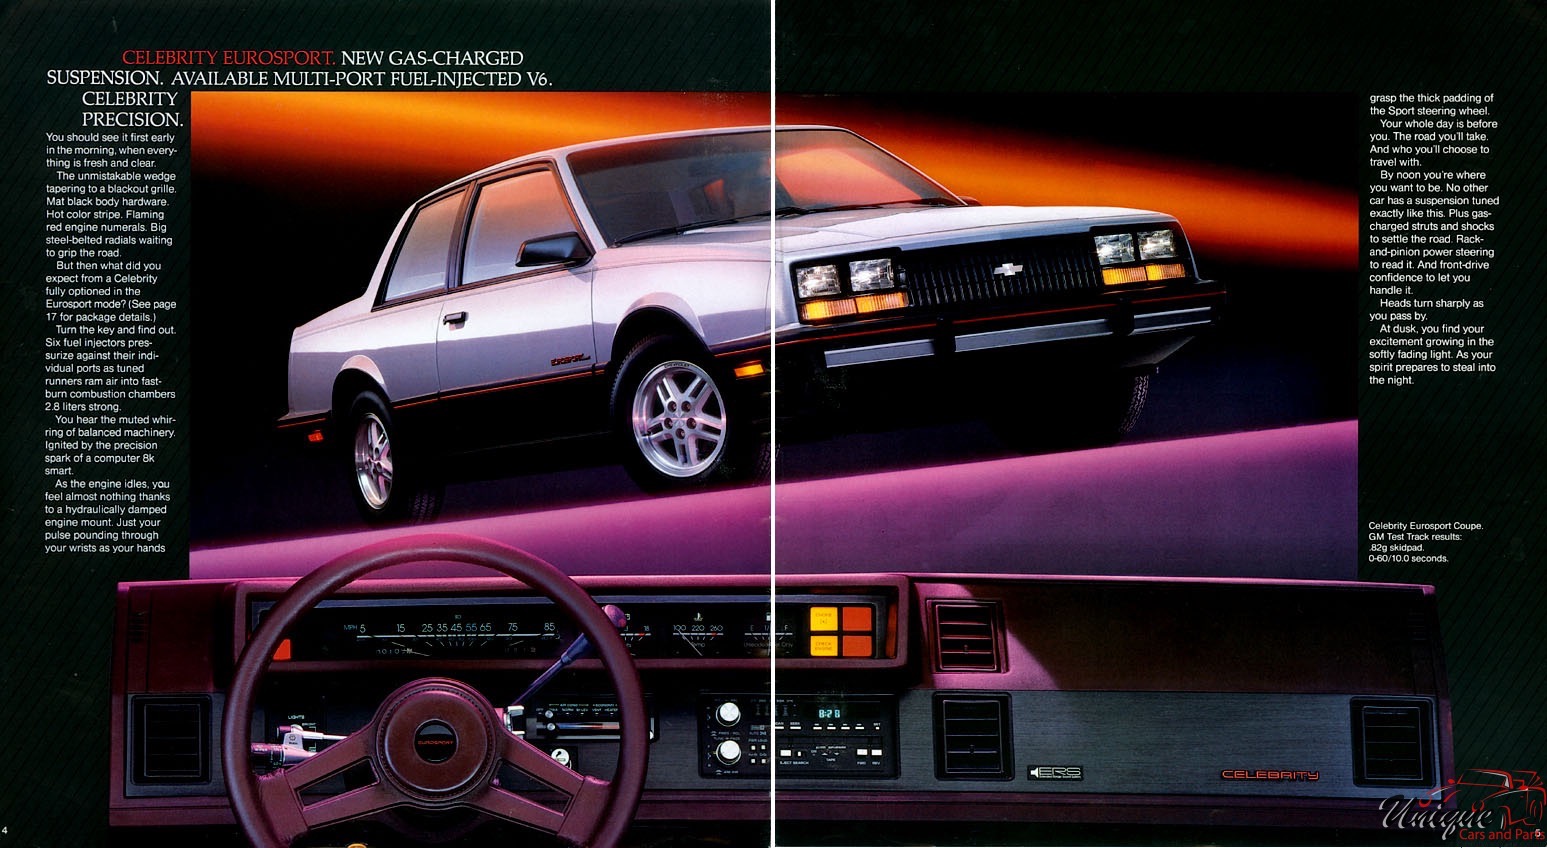 1985 Chevrolet Celebrity Brochure Page 4